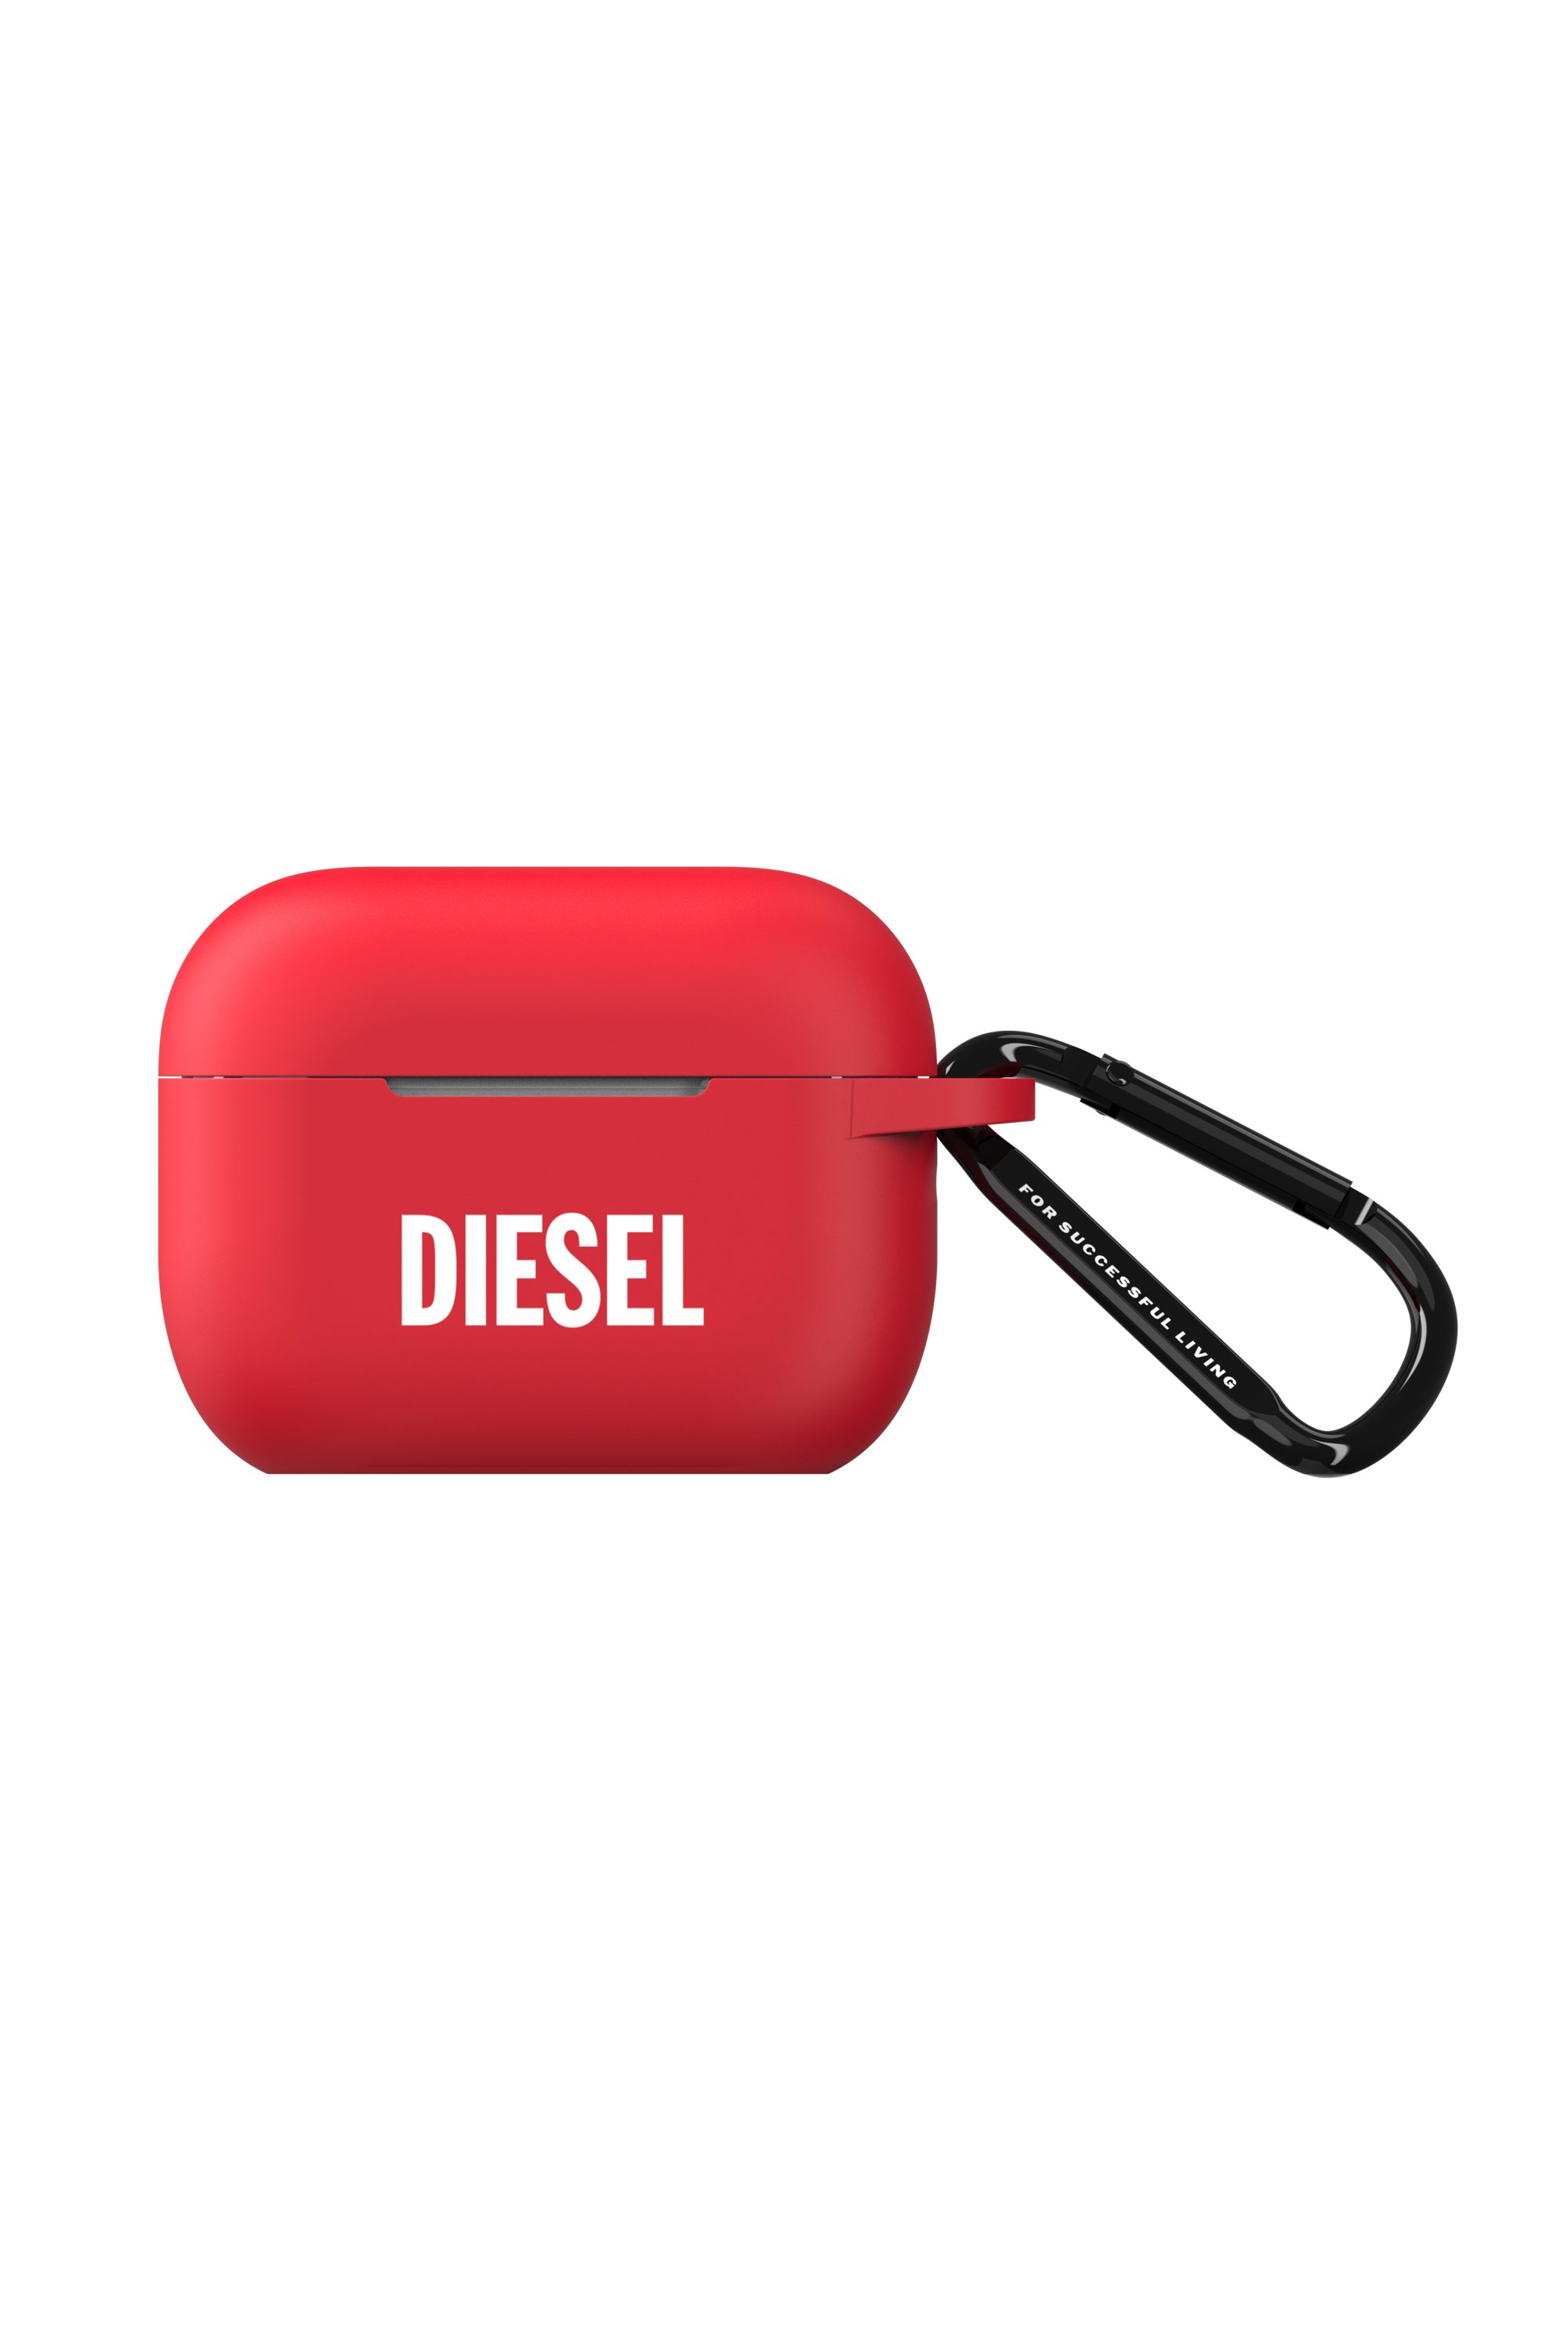 Diesel - 52956 AIRPOD CASE, Red - Image 1